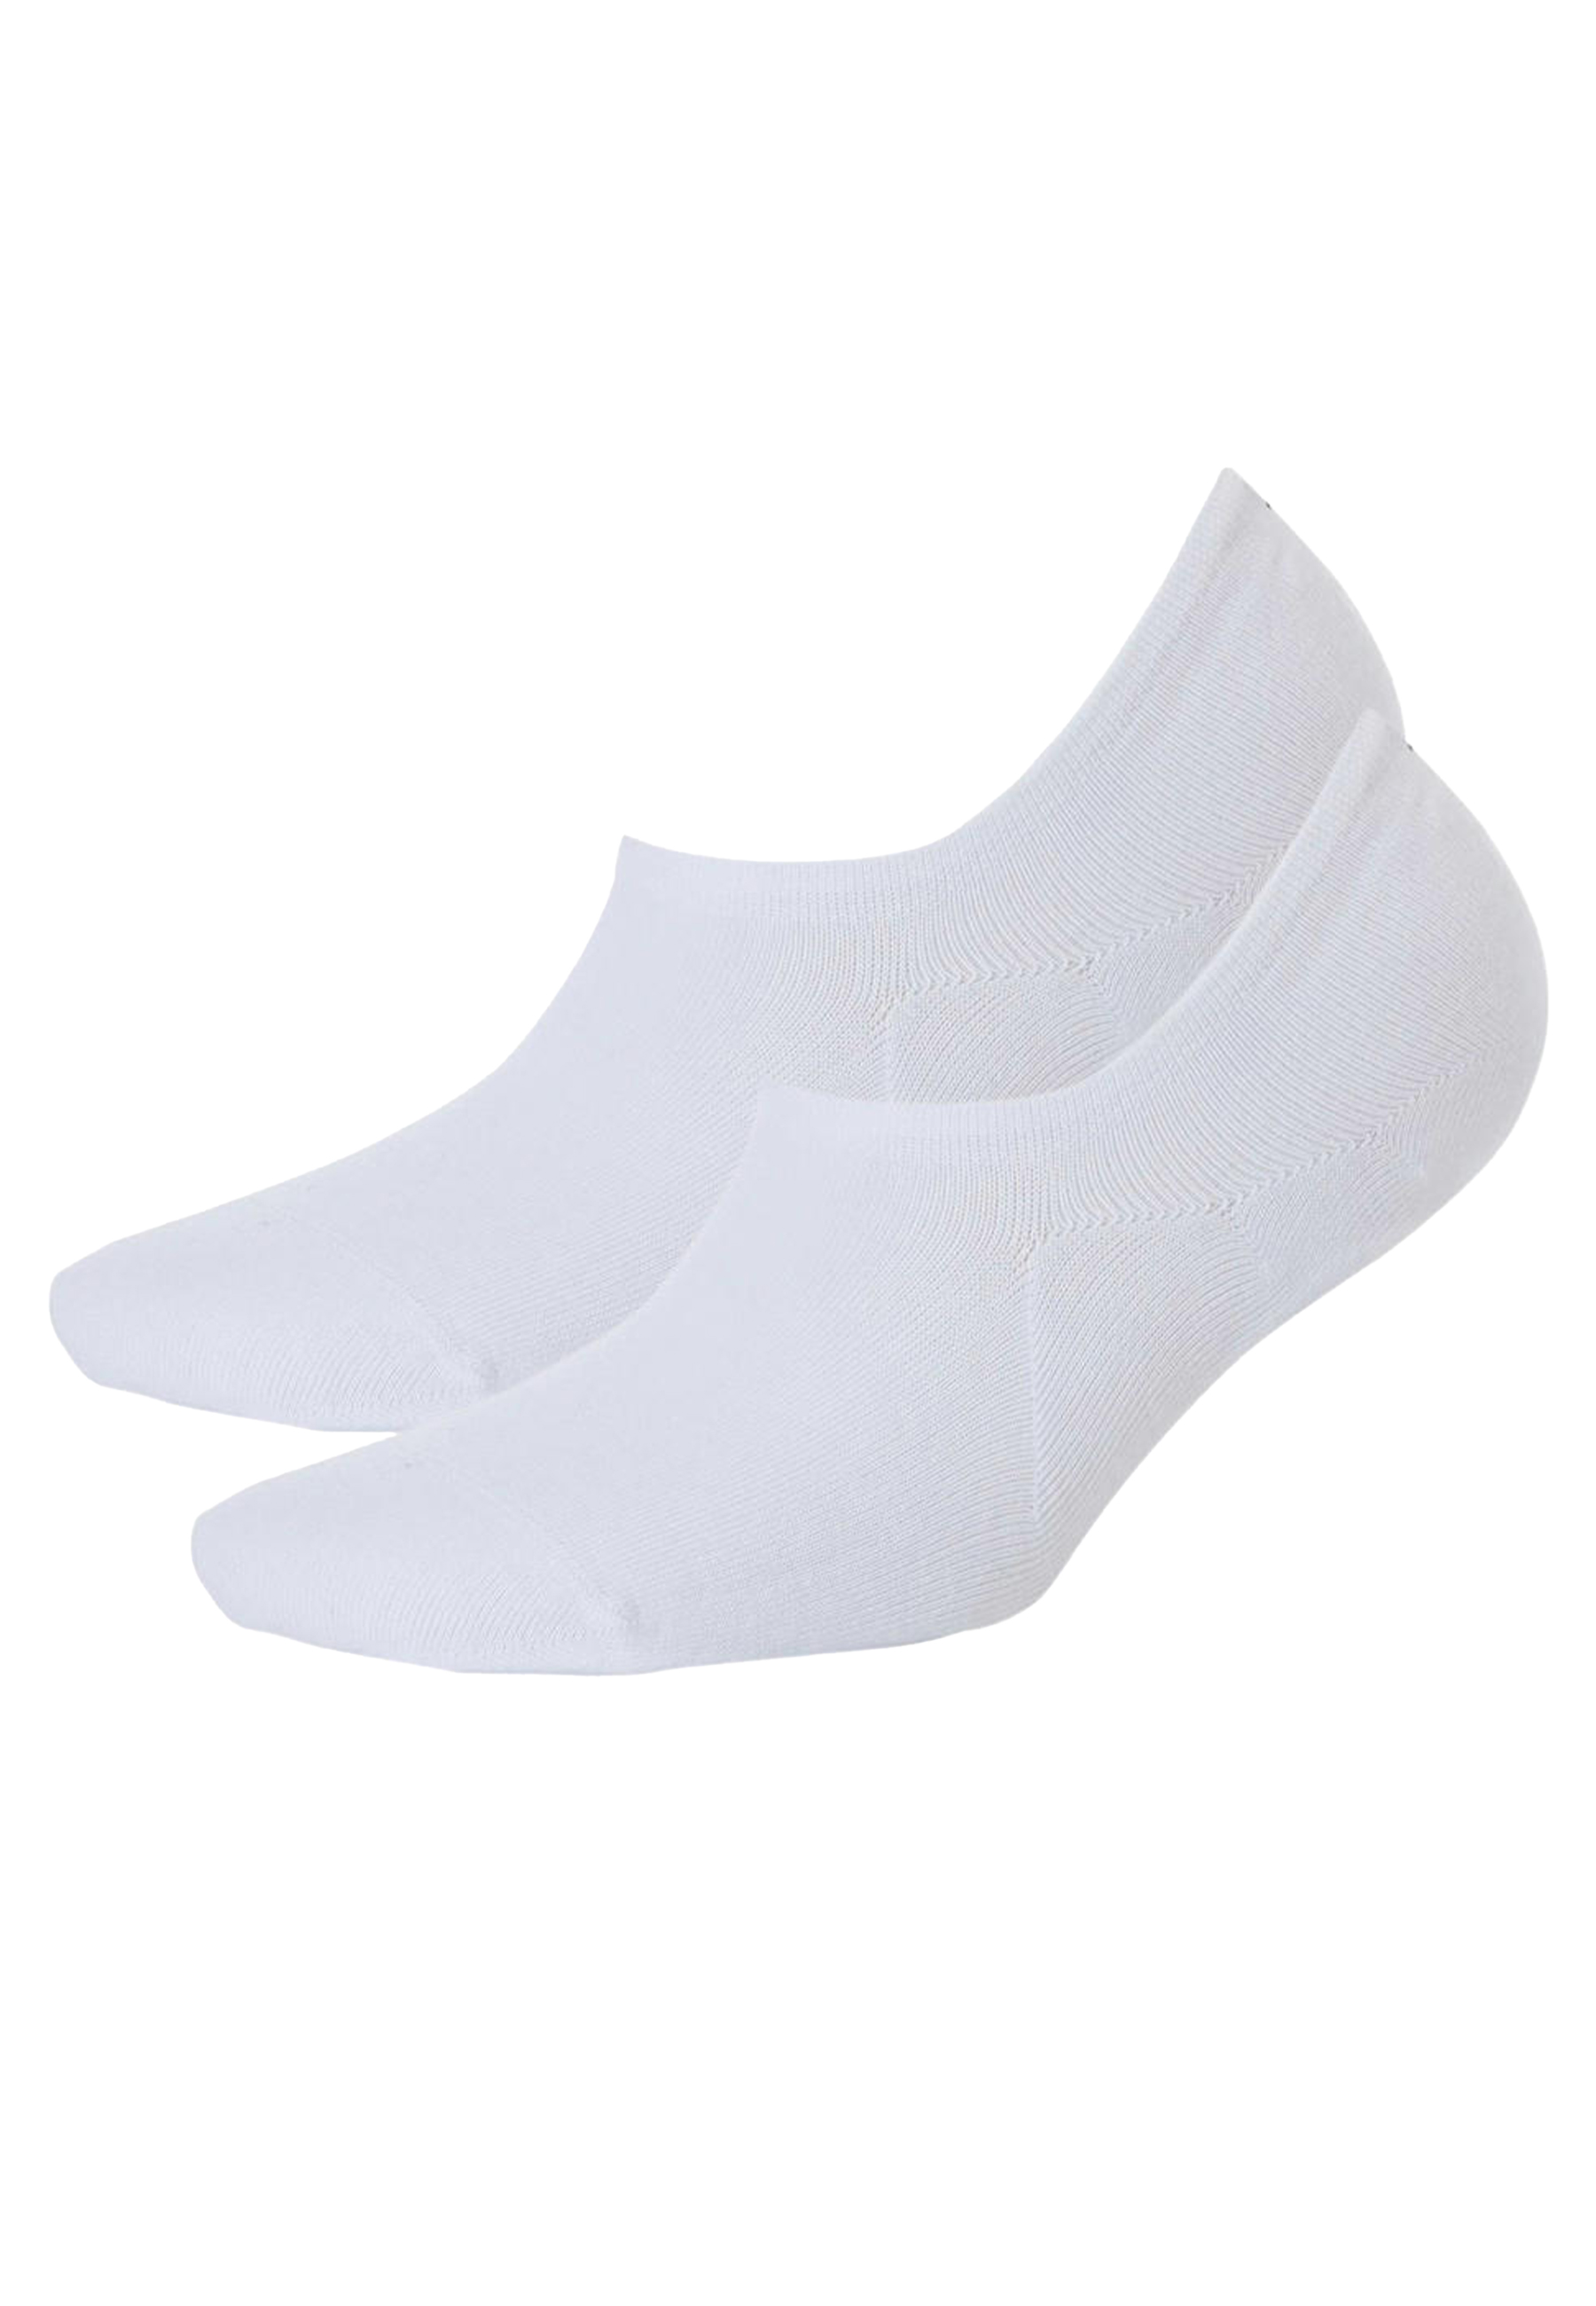 Stichd Sokken Wit Katoen maat 43-46 sokken wit